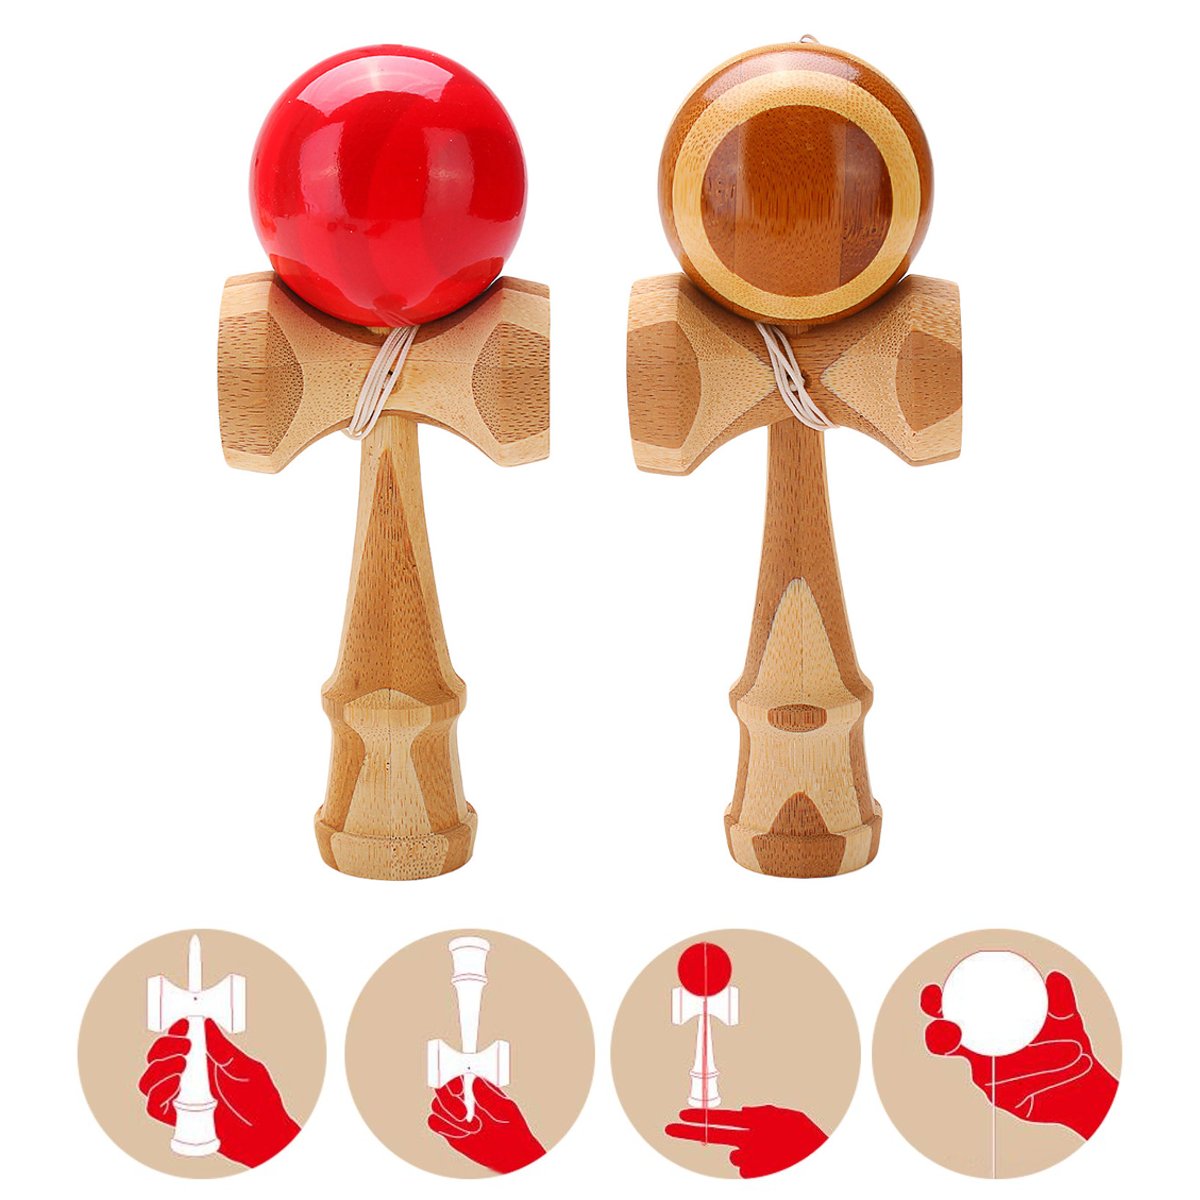 

Jumbo Wooden Kendama Wooden Toys Jumbo Japanese Traditional Game Educational Balance Skillful